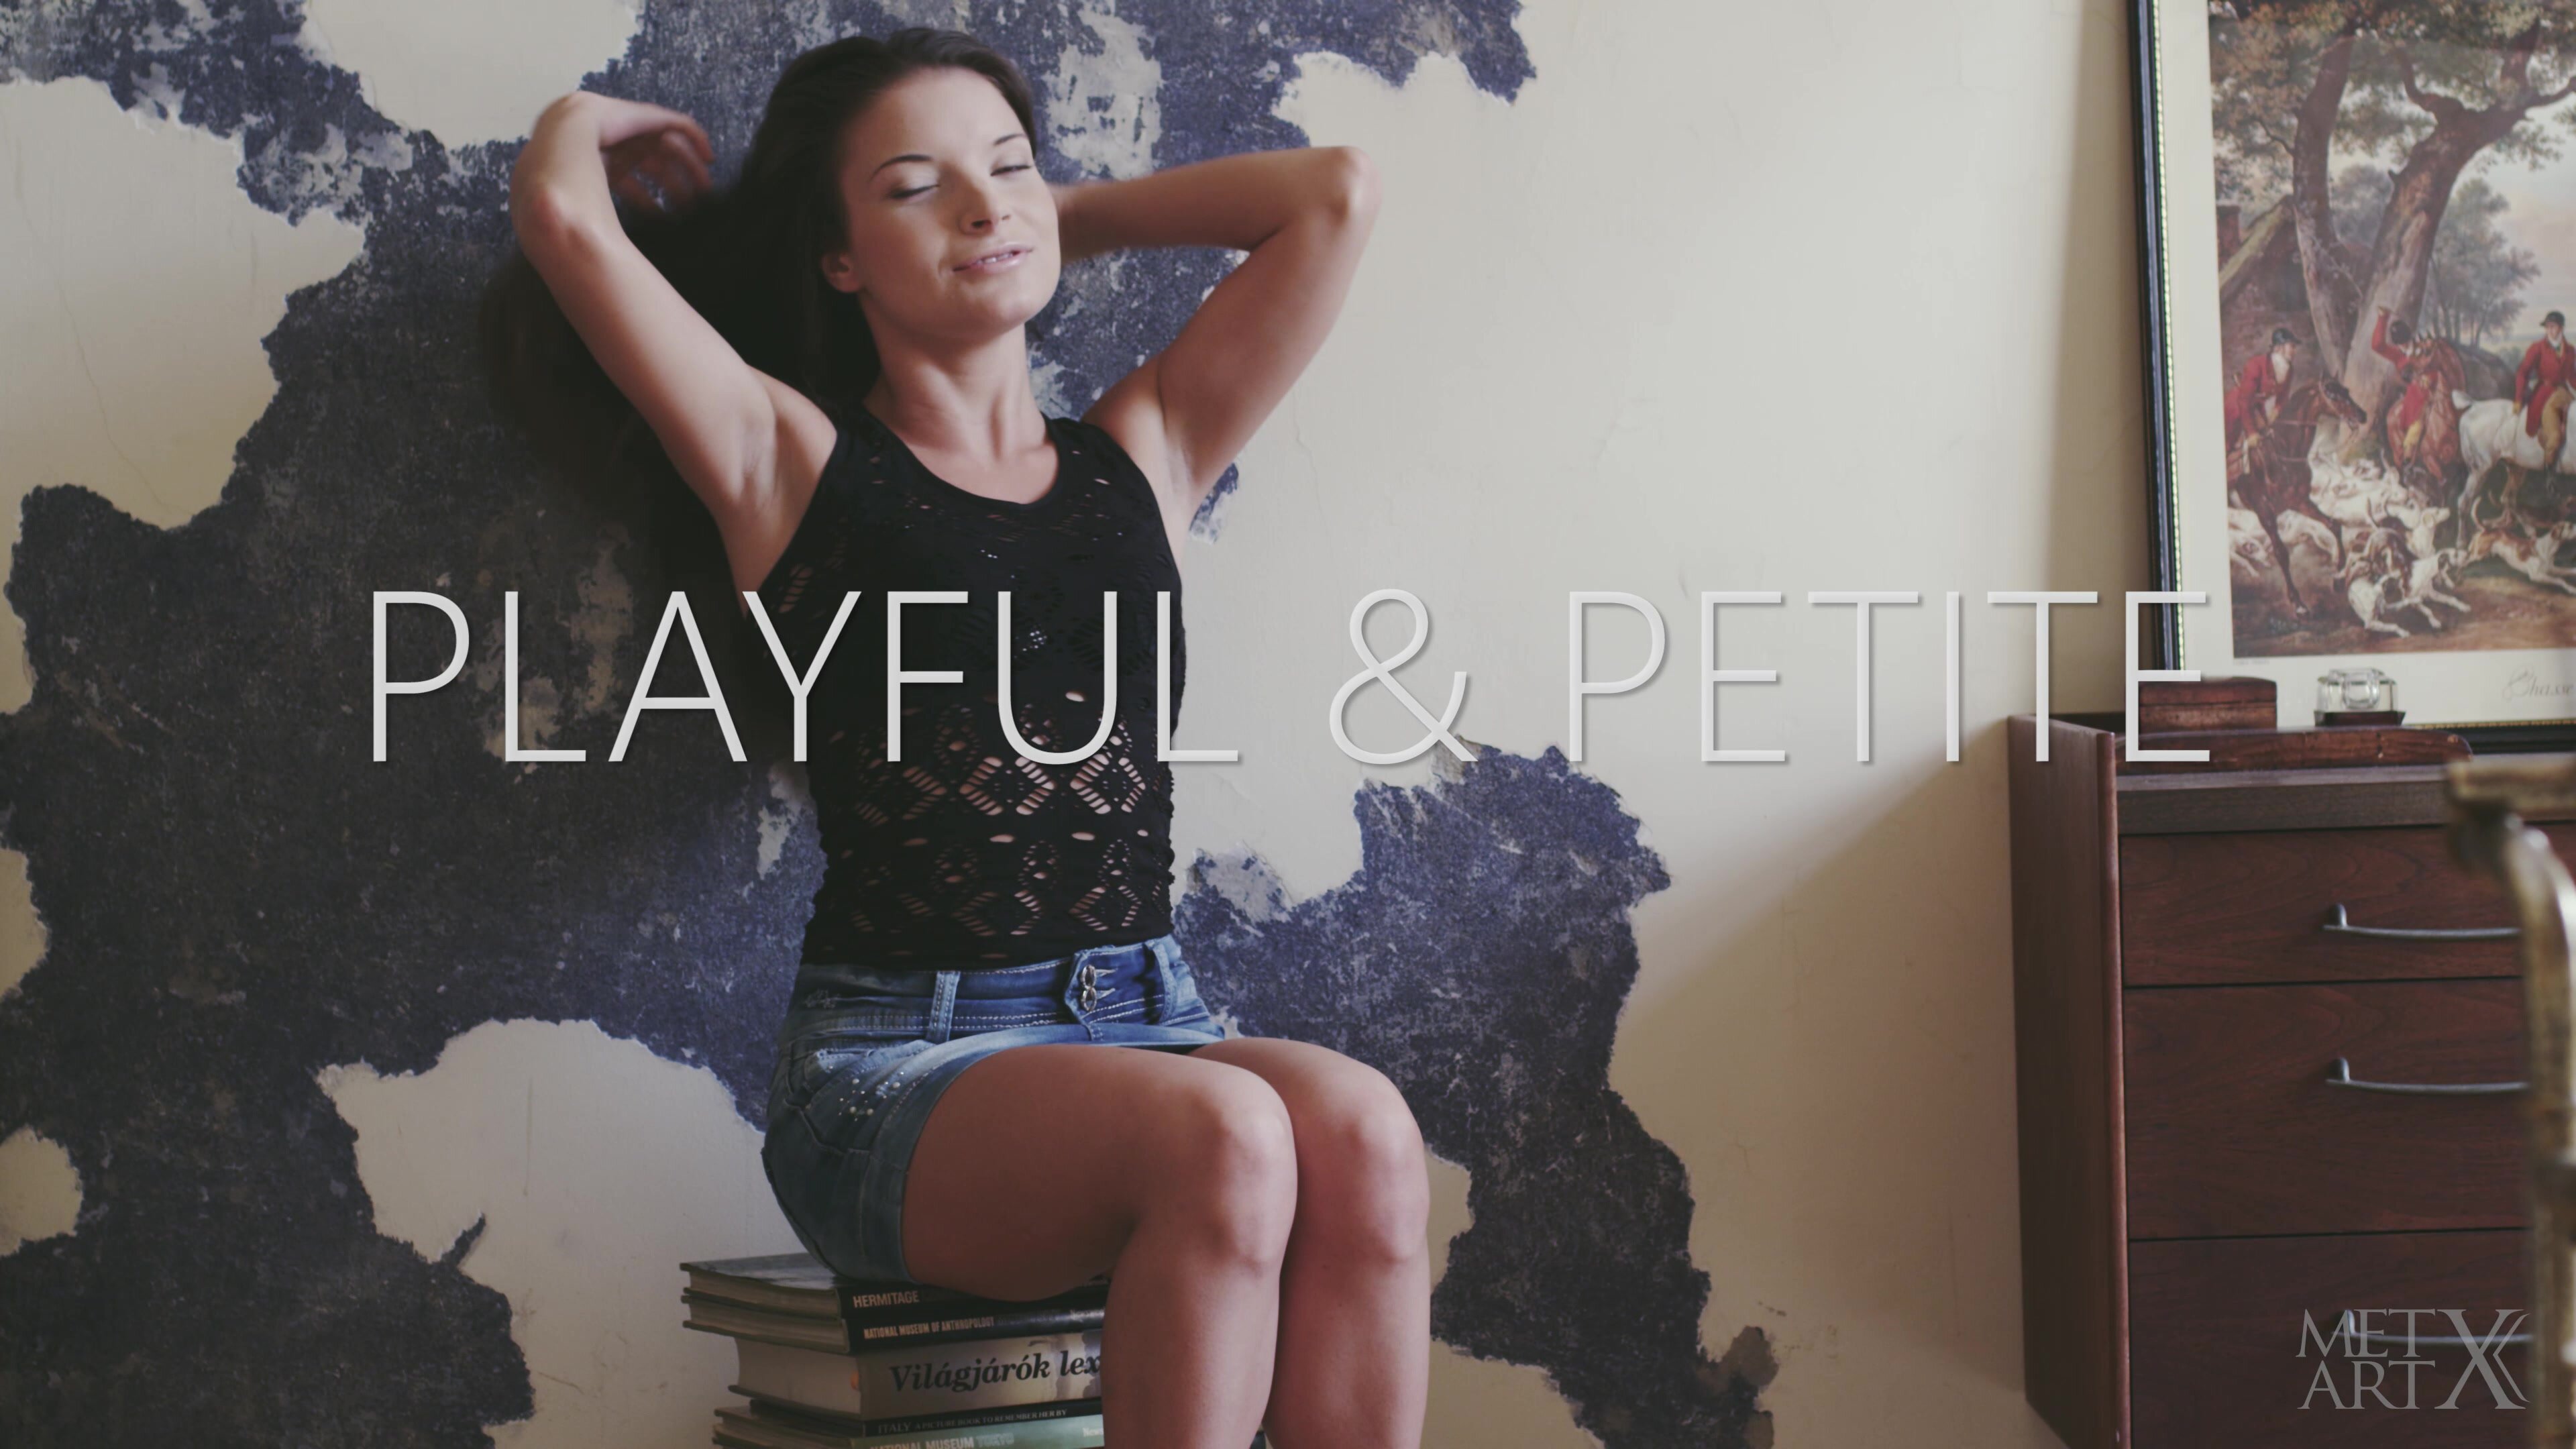 MetArtX - Playful and Petite - Anita Bellini